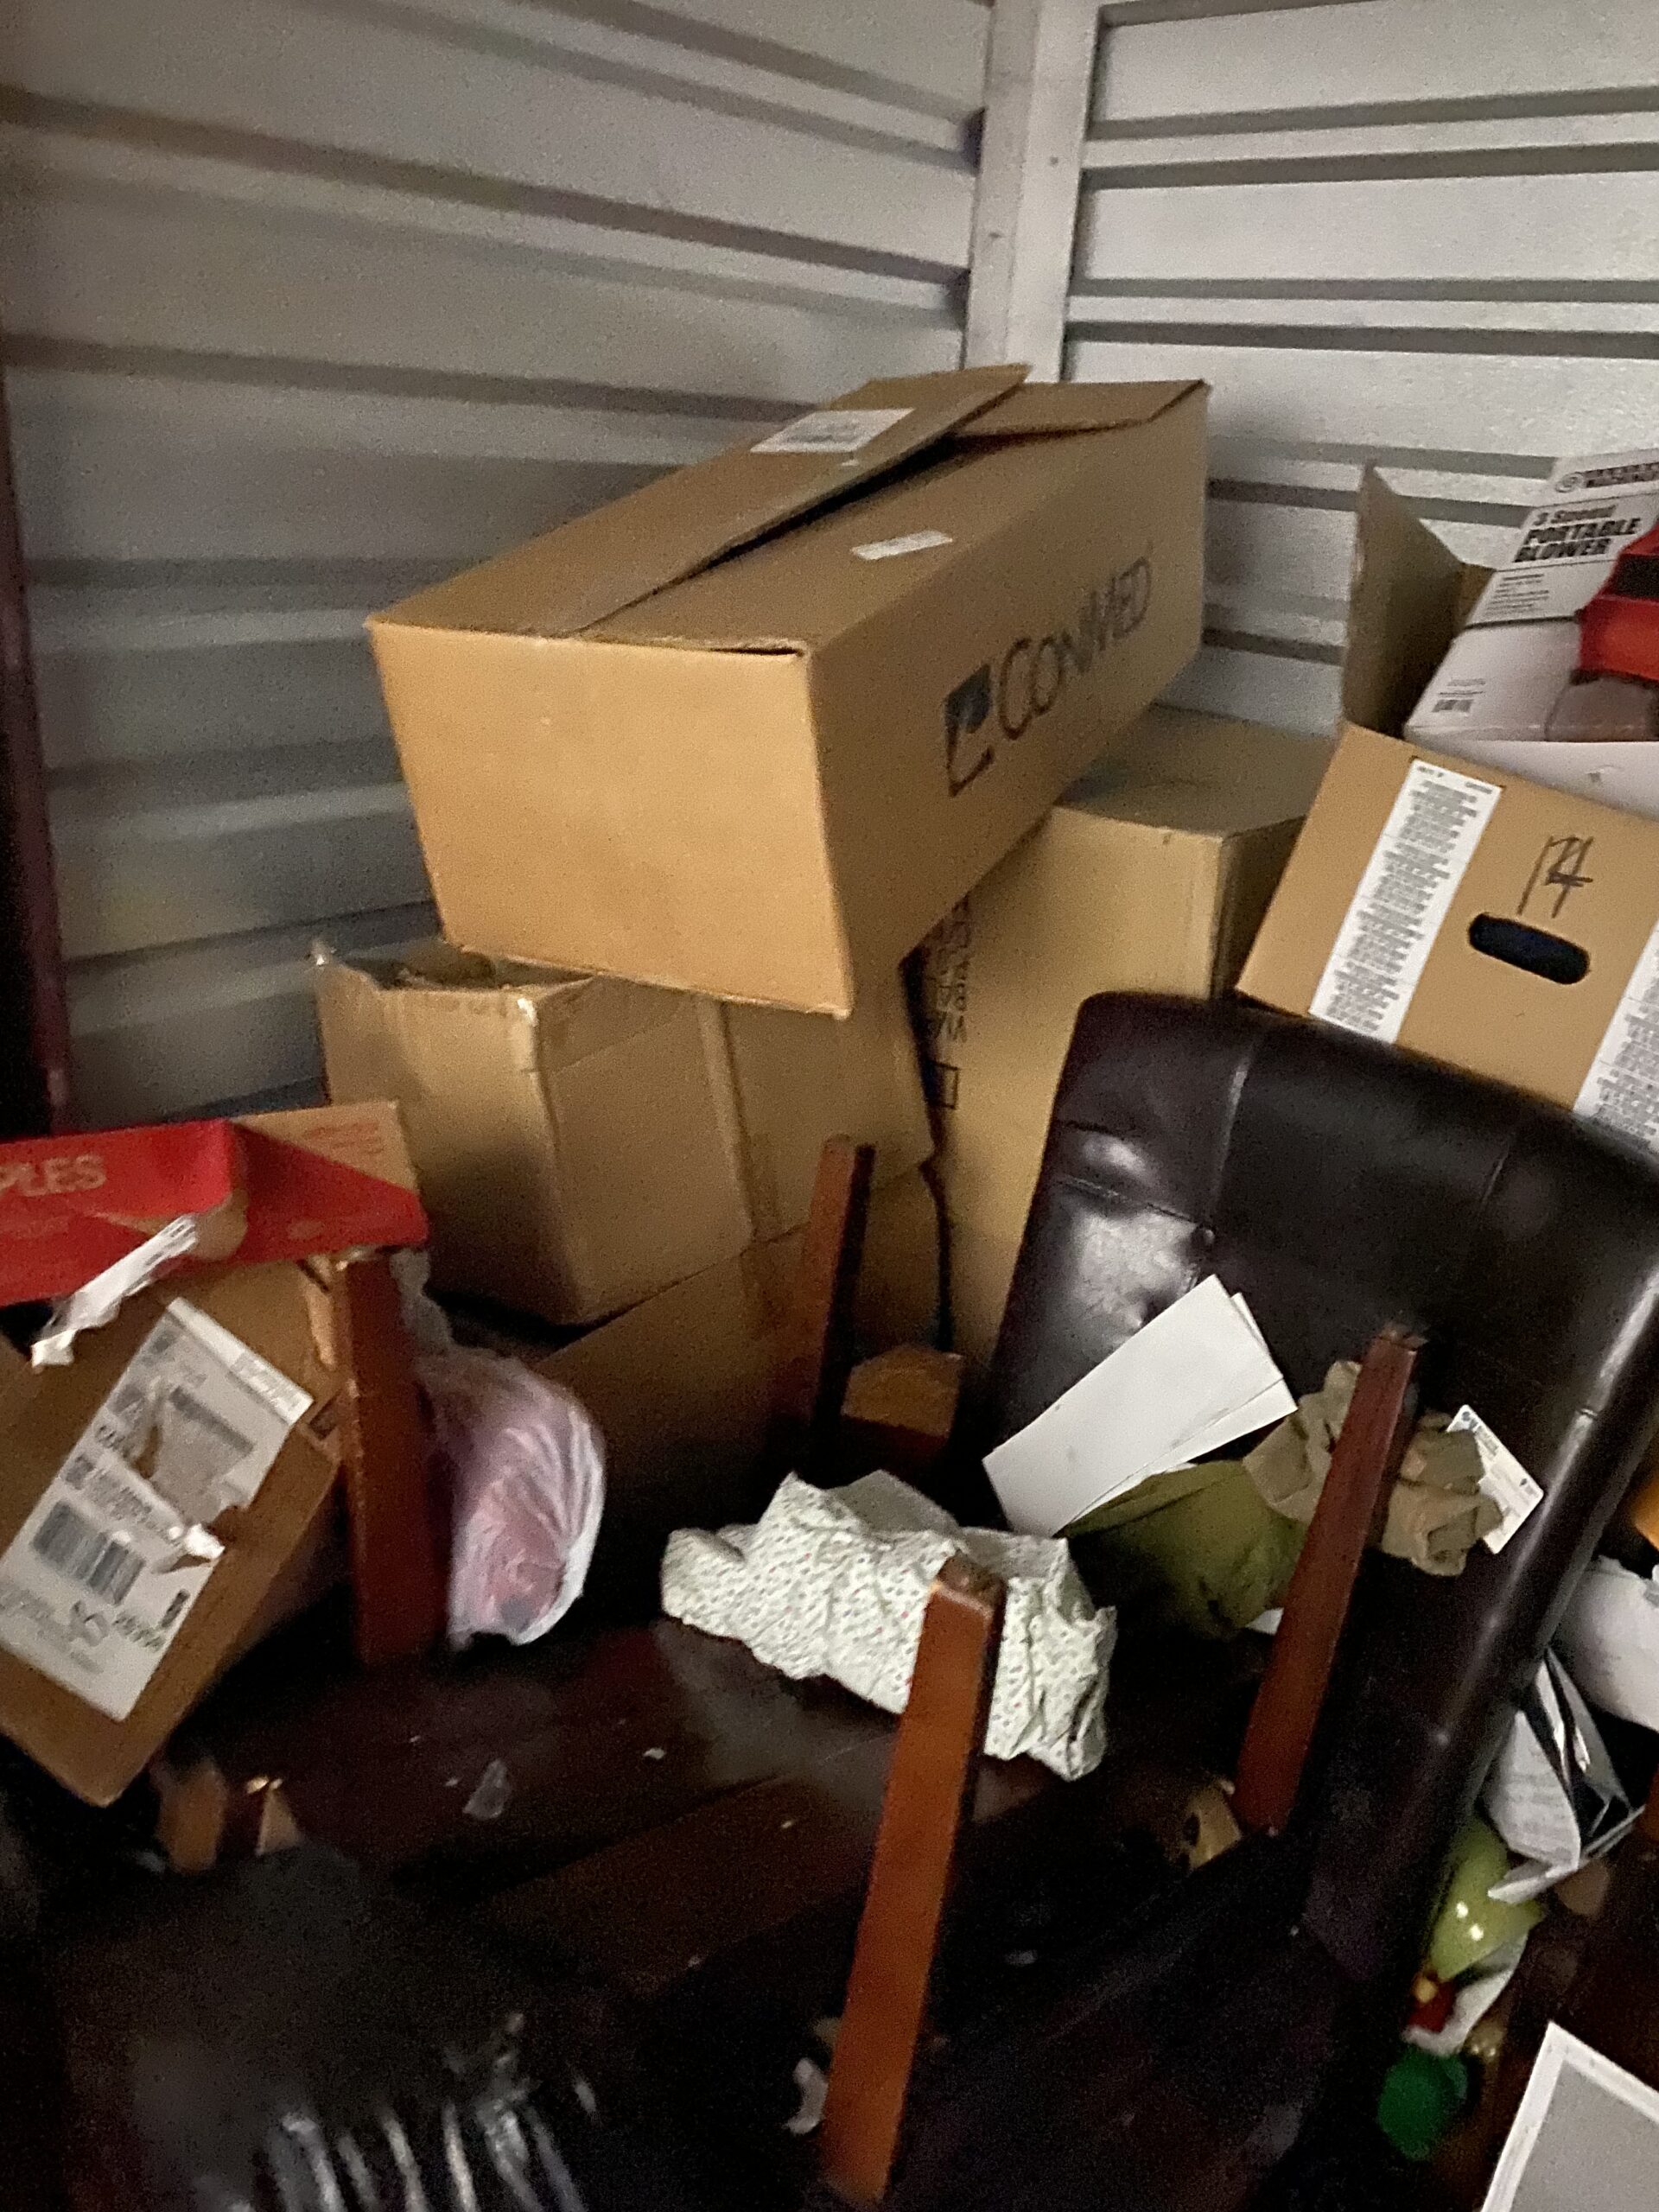 CubeSmart complaint Theft and damage to storage unit